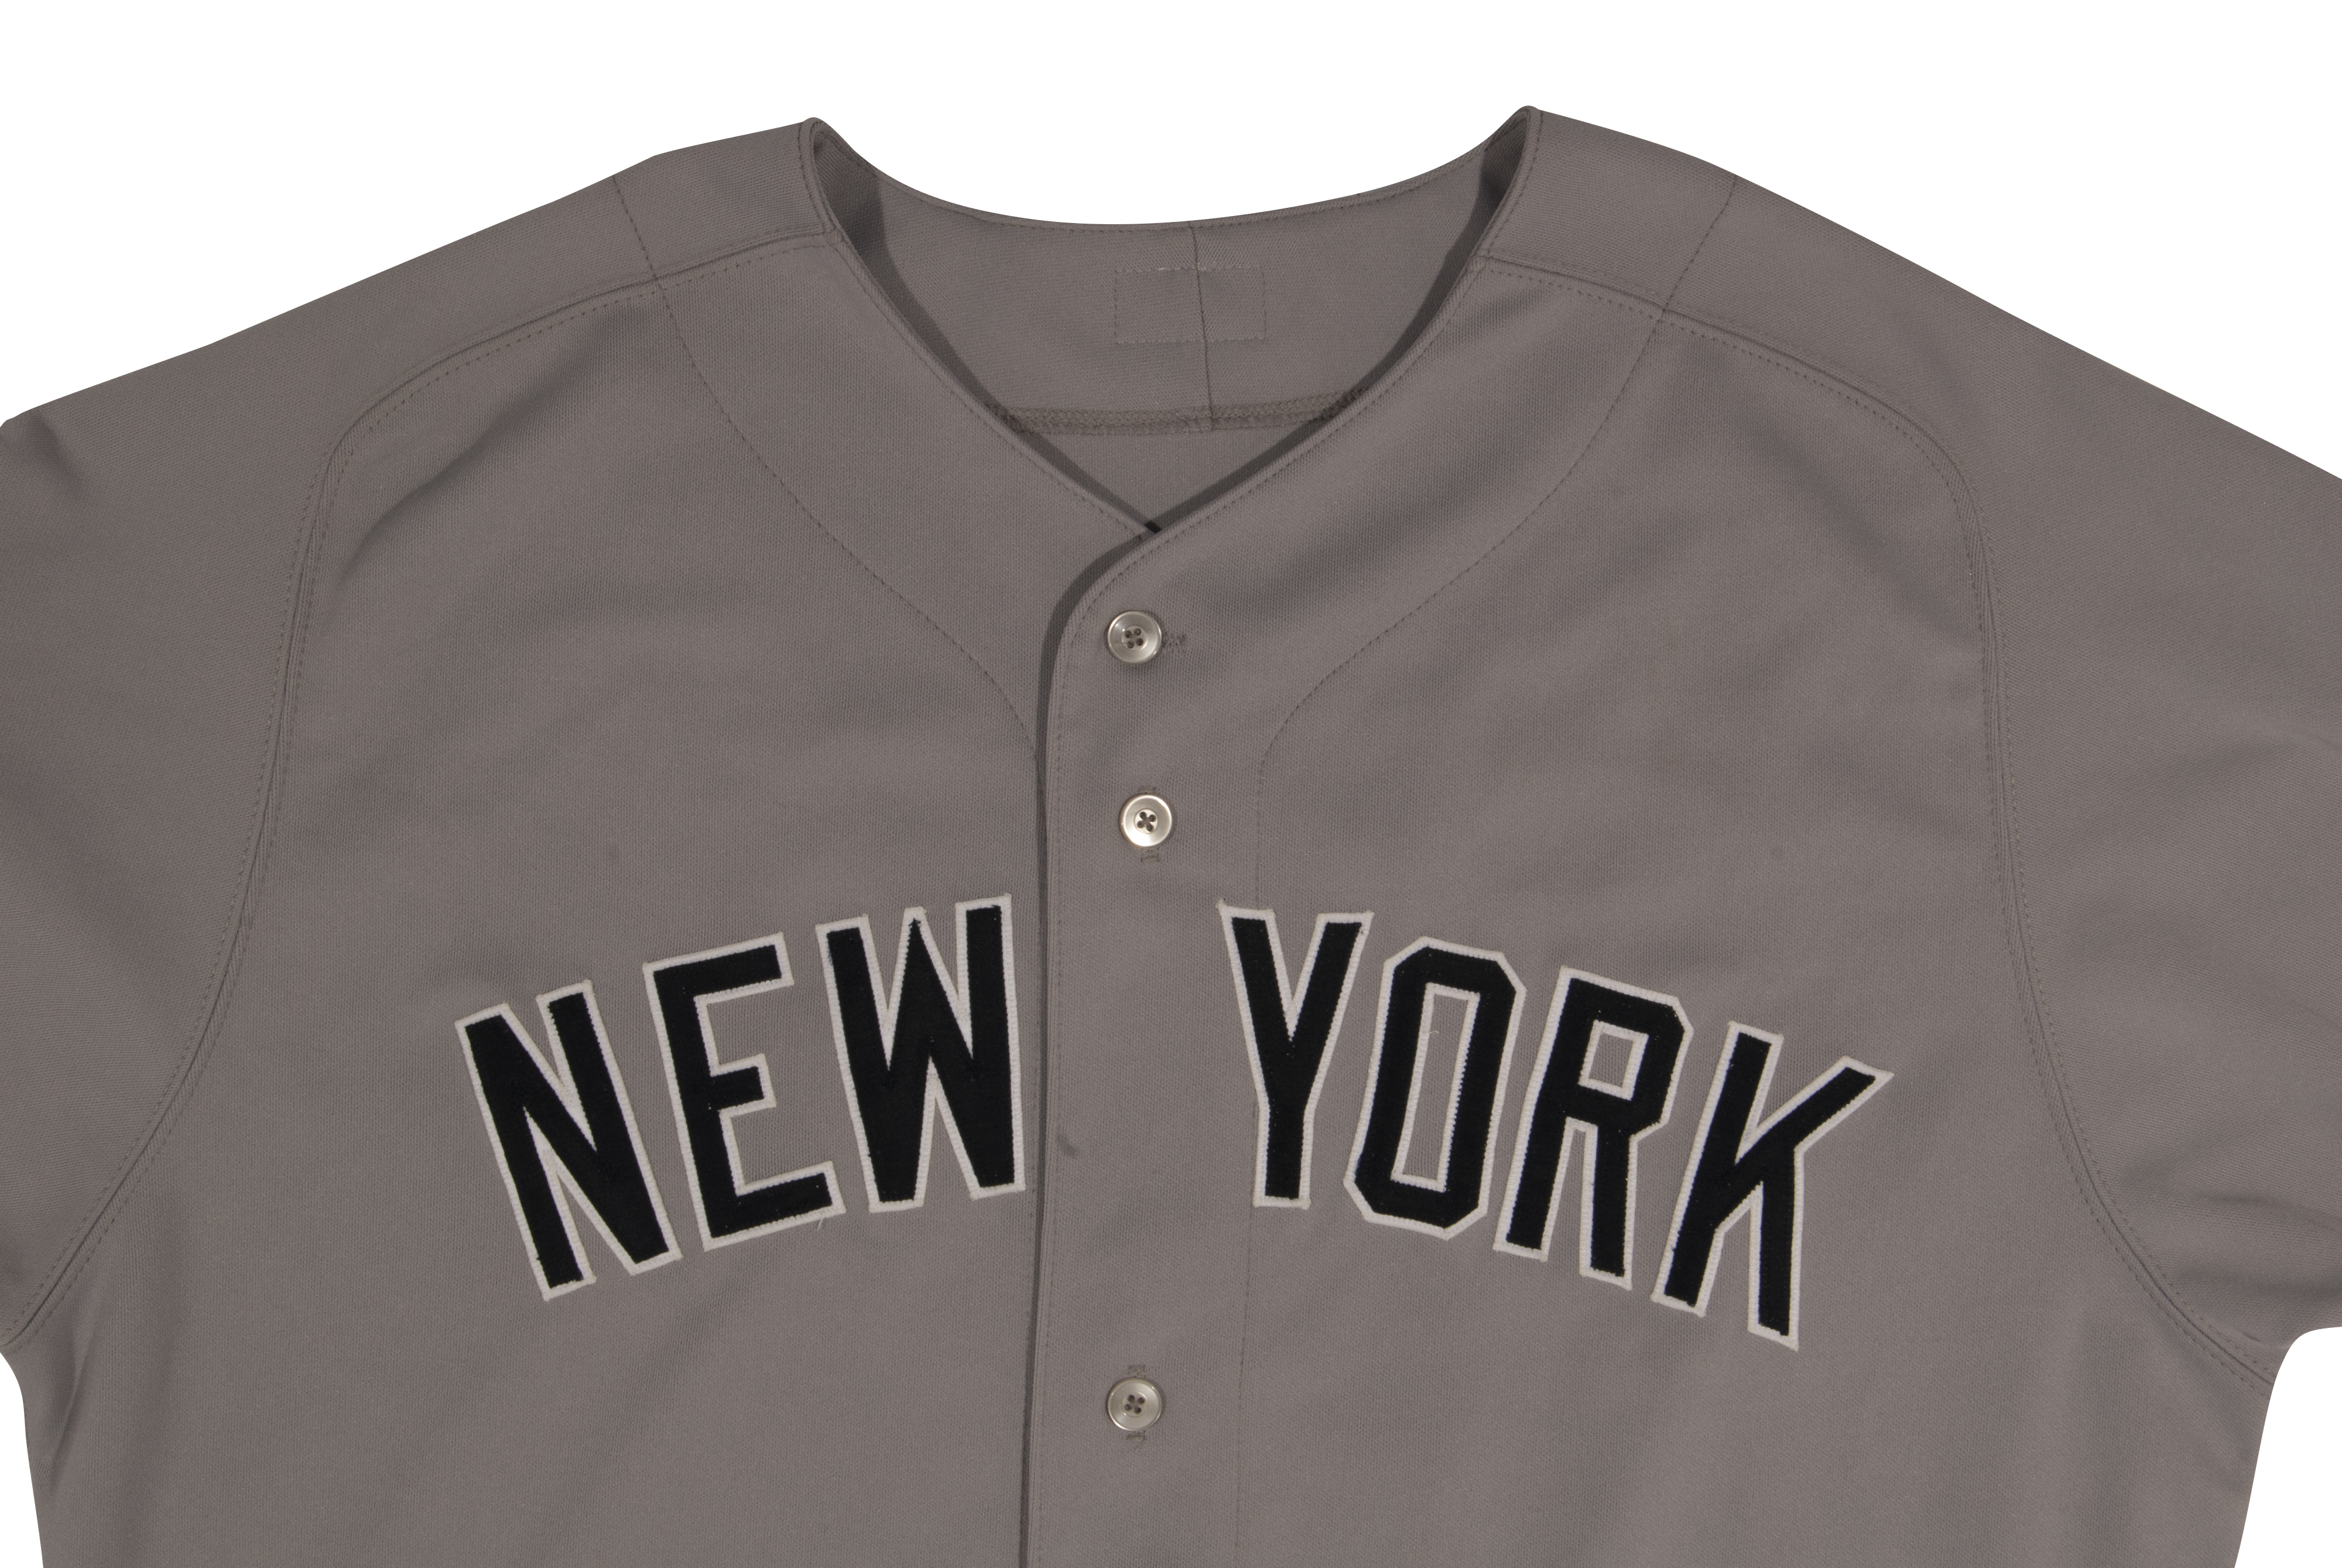 Lot Detail - Derek Jeter Signed World Series Patch Yankees Home